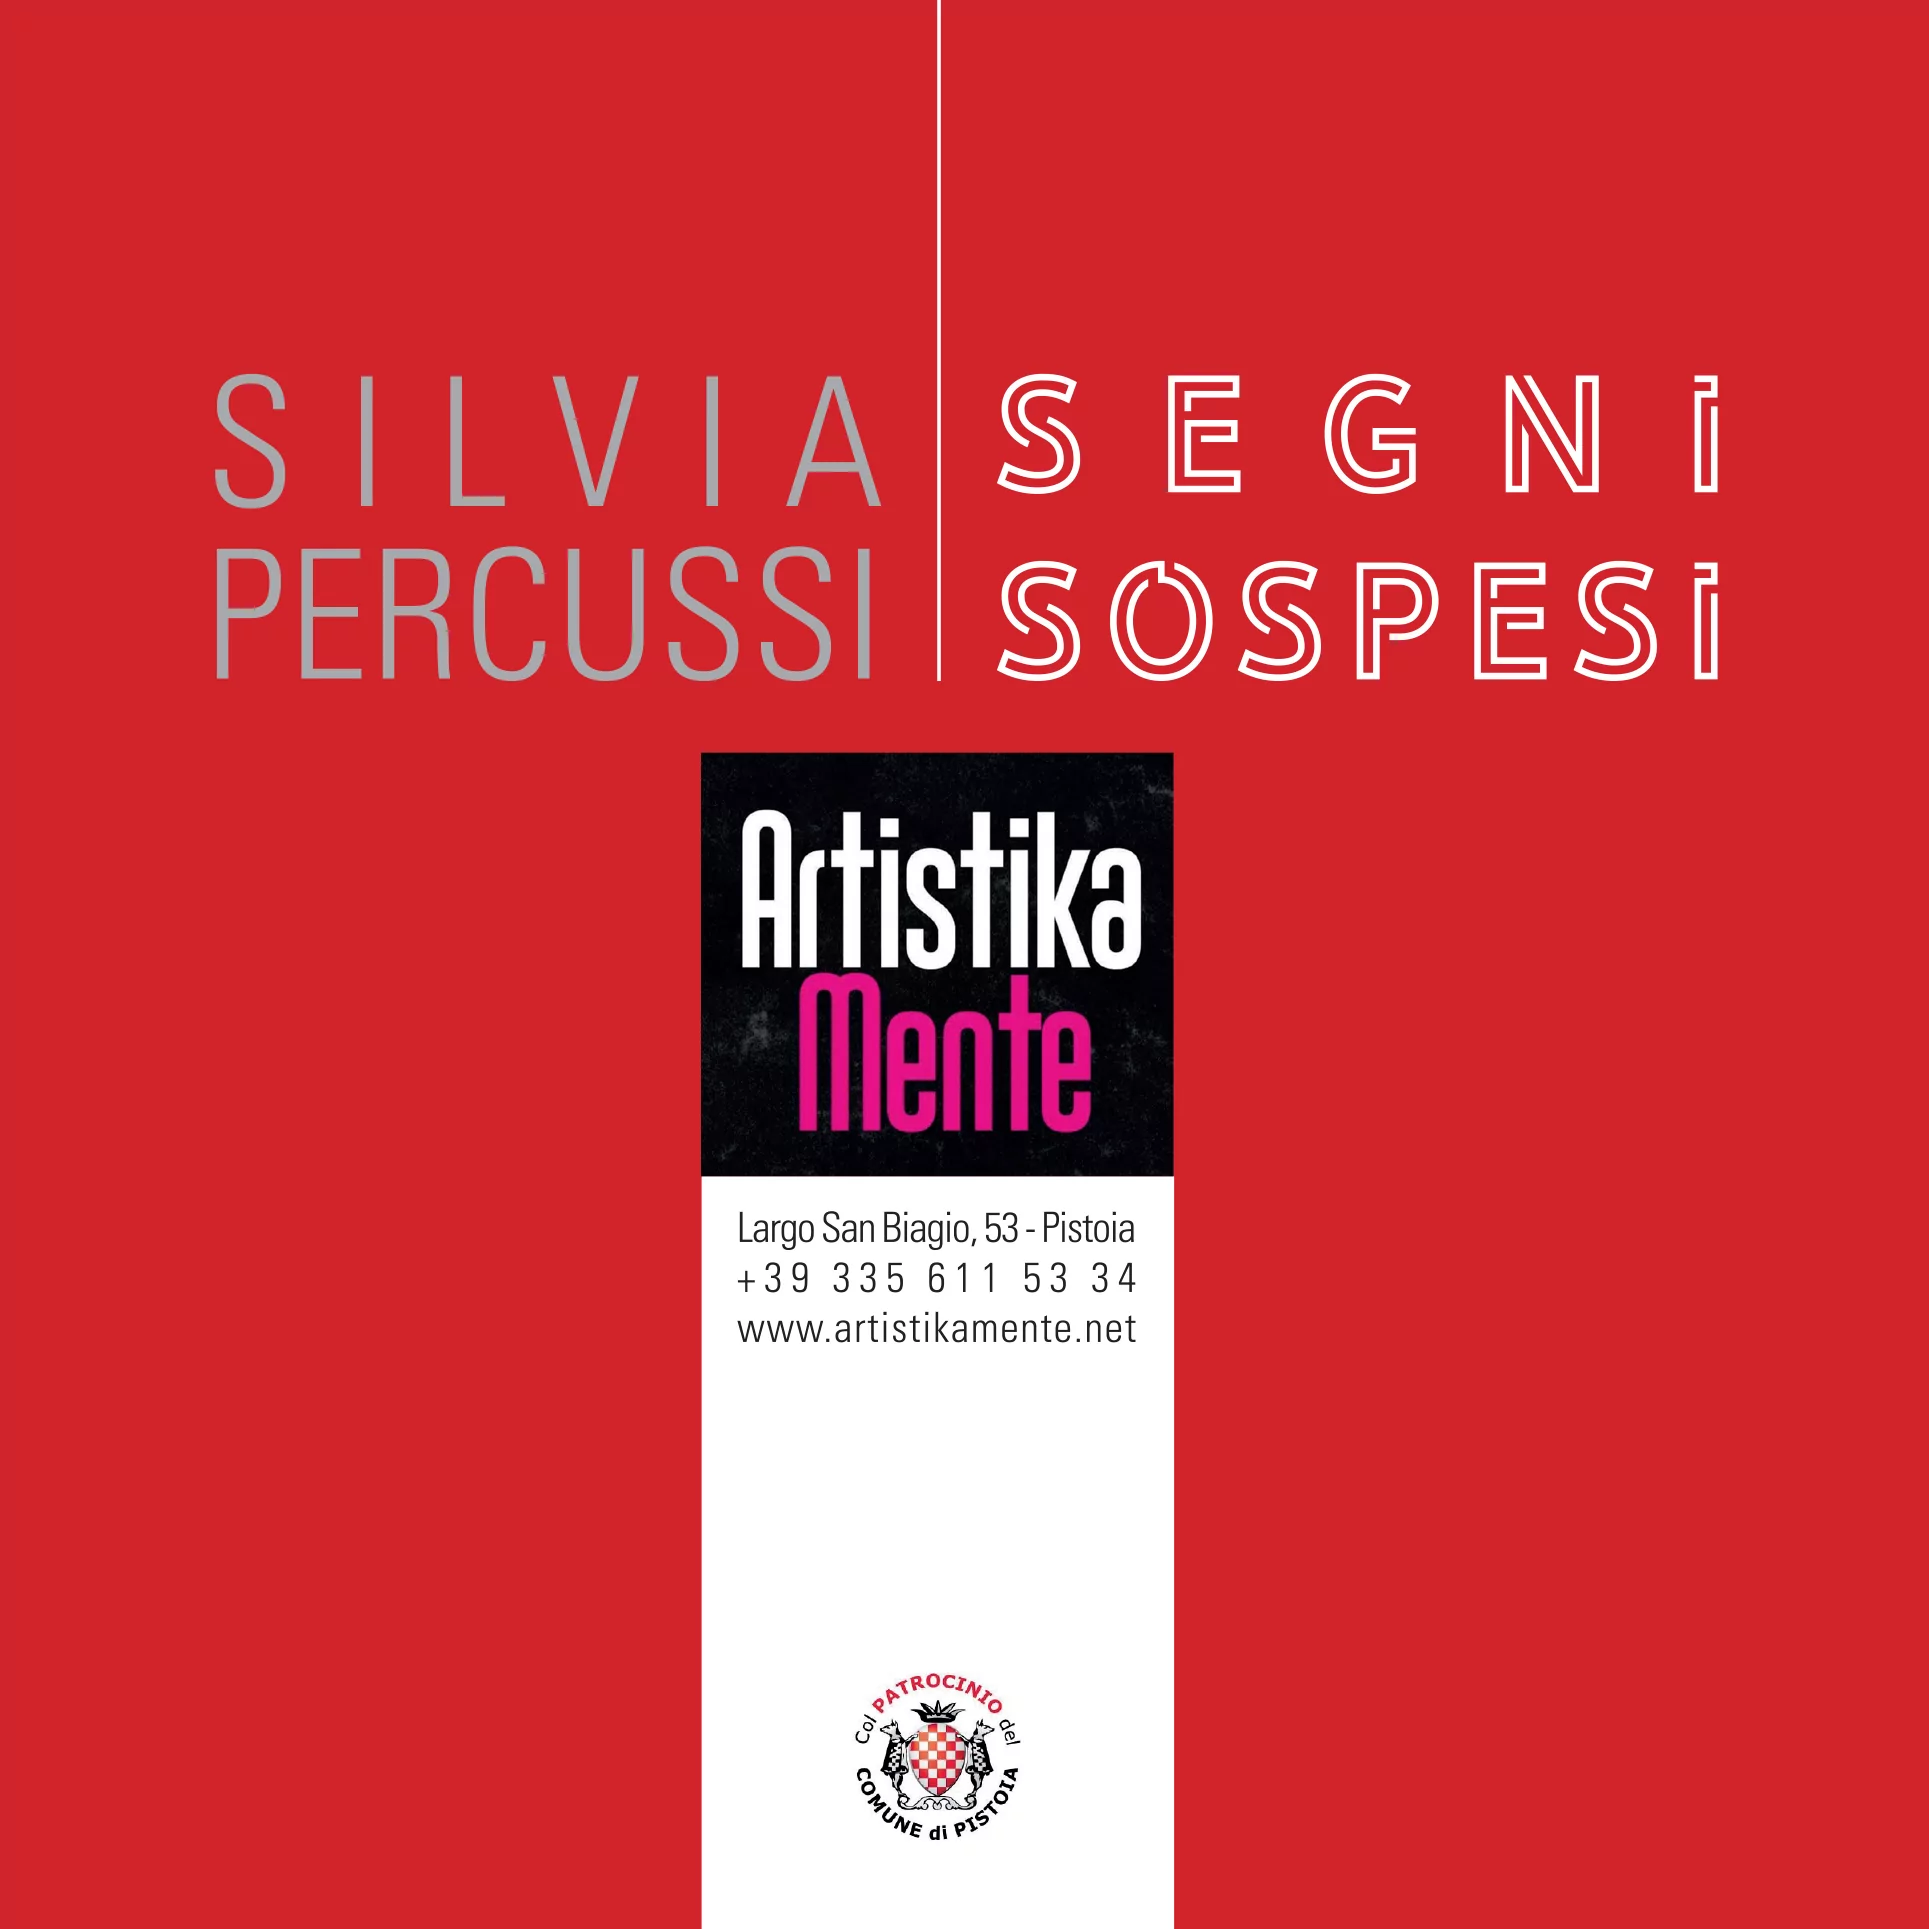 SEGNI SOSPESI - Silvia Percussi